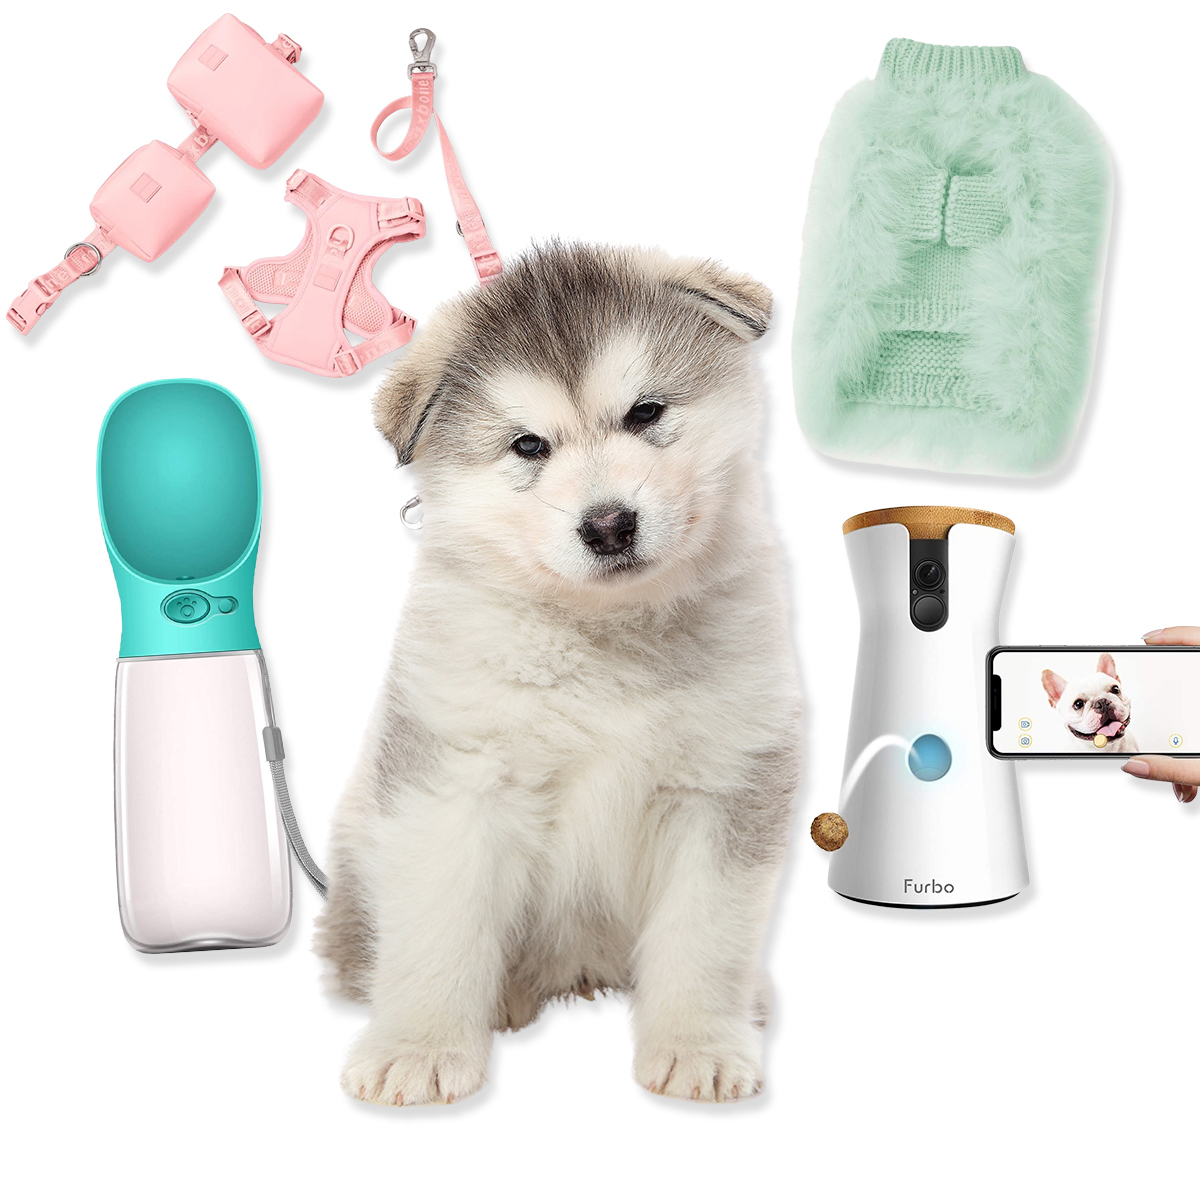 Custom Pet Stainless Steel Water Bottle, Custom Dog Water Bottle, Dog Lover  Gift, Cat Lover Gift, Water Bottle, Personalized Pet Gift 